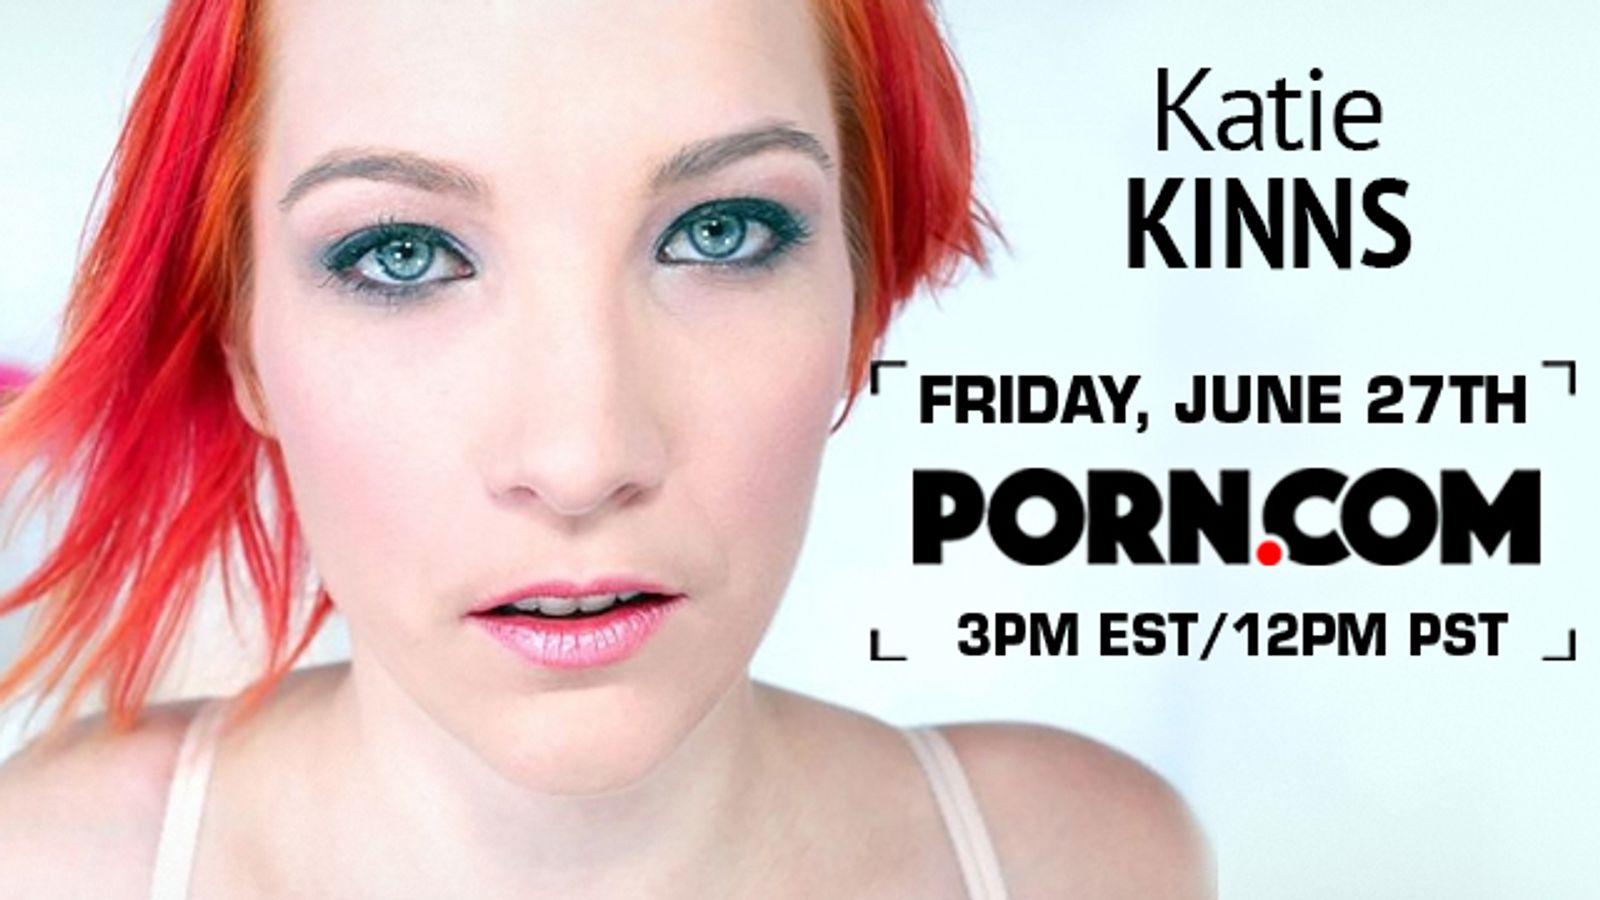 Porn.com Presents Katie Kinns' Free Live Cam Show This Friday